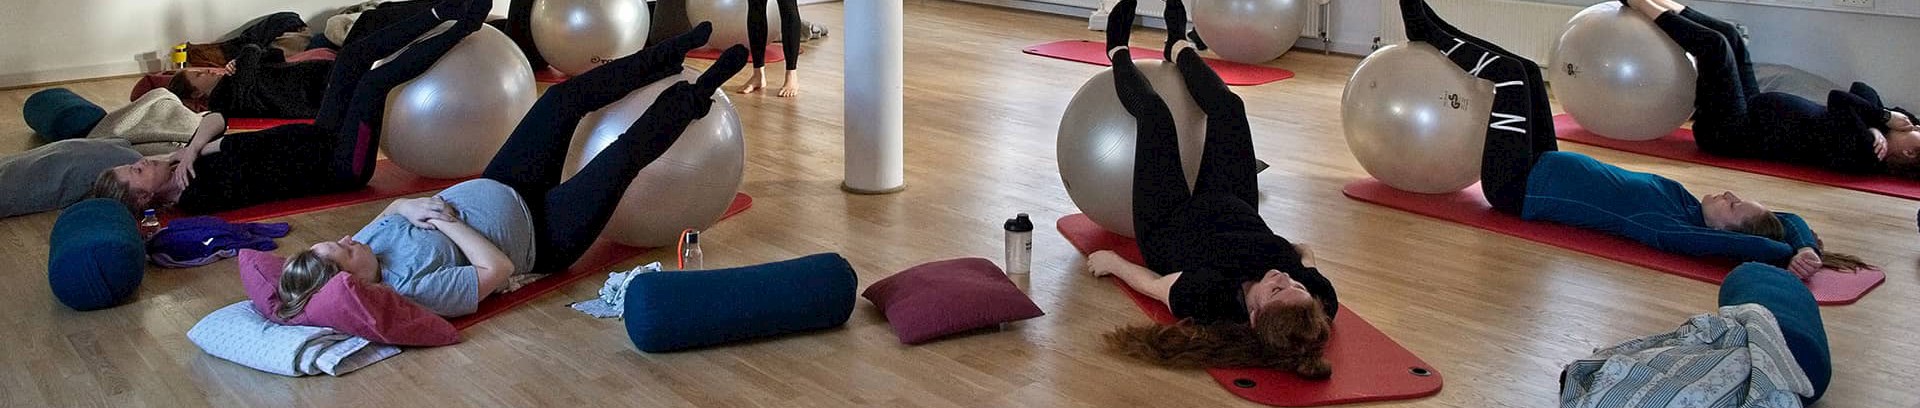 Undervisning i yoga og pilates for gravide ved FOF Aarhus, underviser Mette Axel Petersen